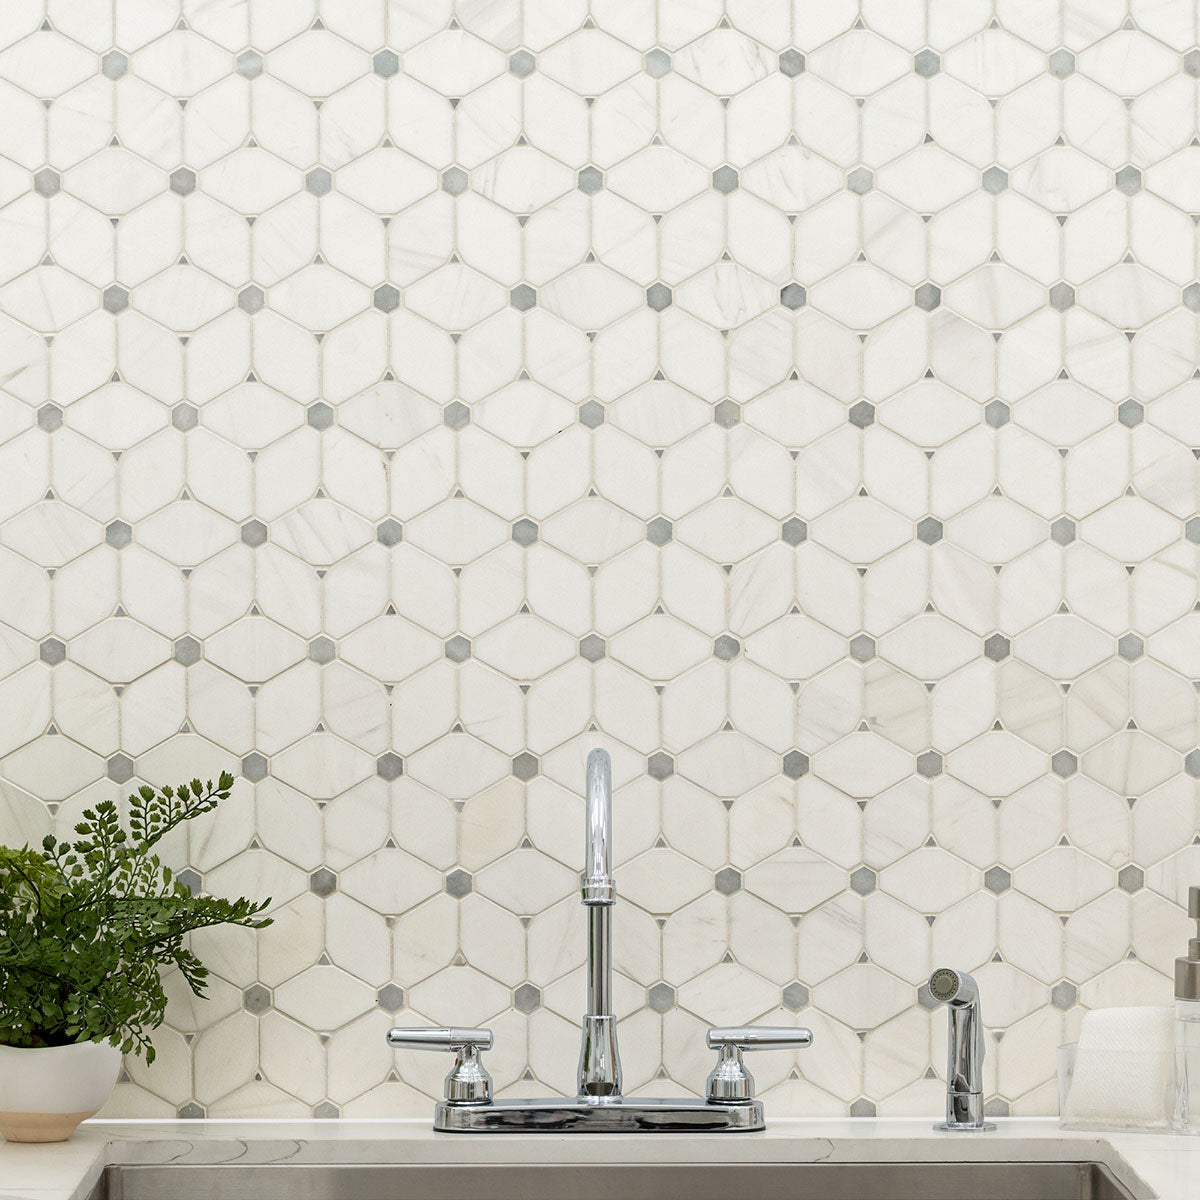 M - Geometric Grey & White Pattern Tile Flooring  - Greenguard